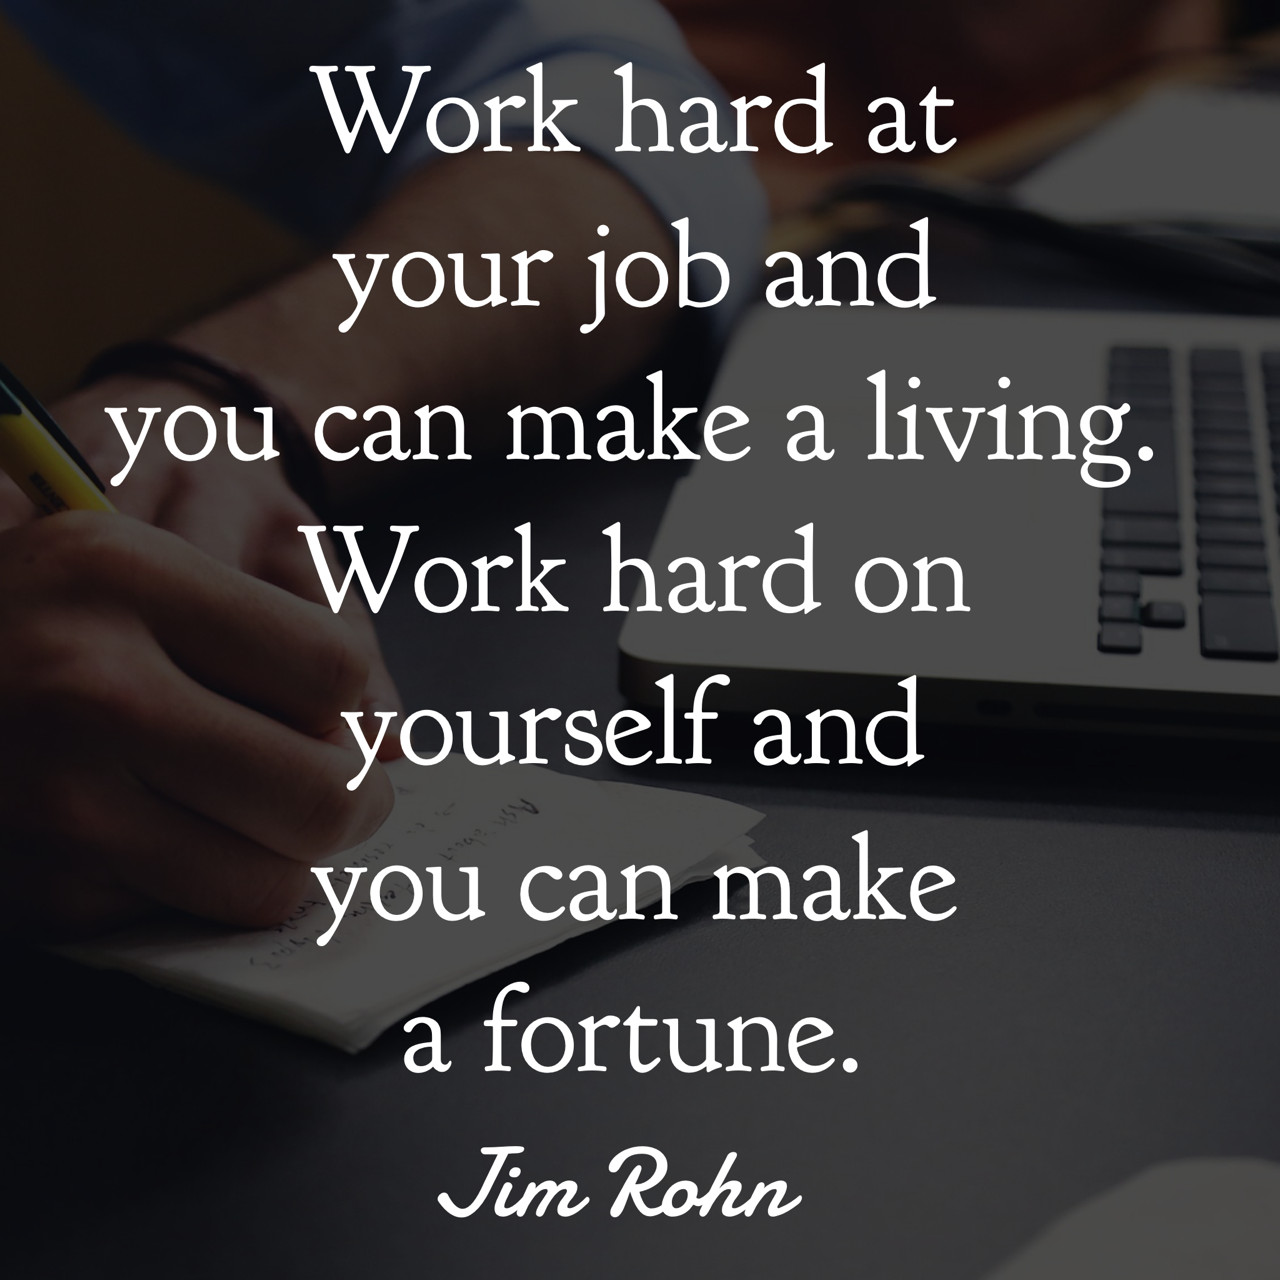 Jim Rohn Motivational Quotes
 20 Highly Motivational Jim Rohn Image Quotes